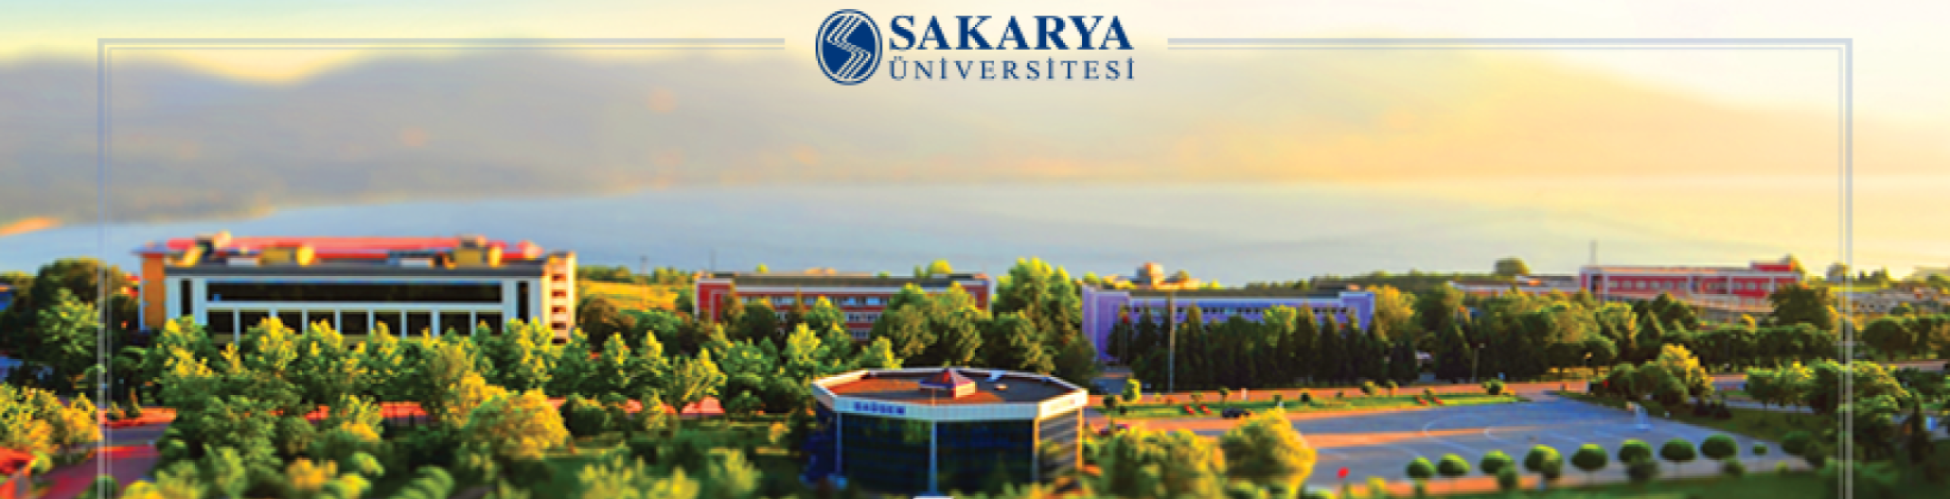 sakarya university world university rankings the